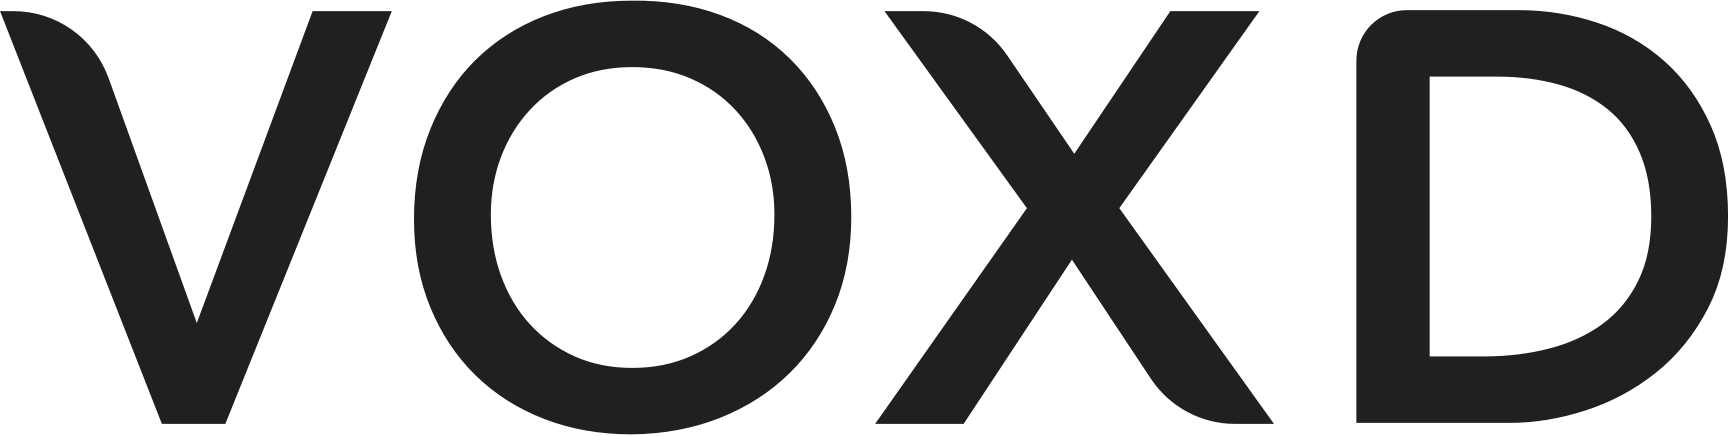 voxd logo